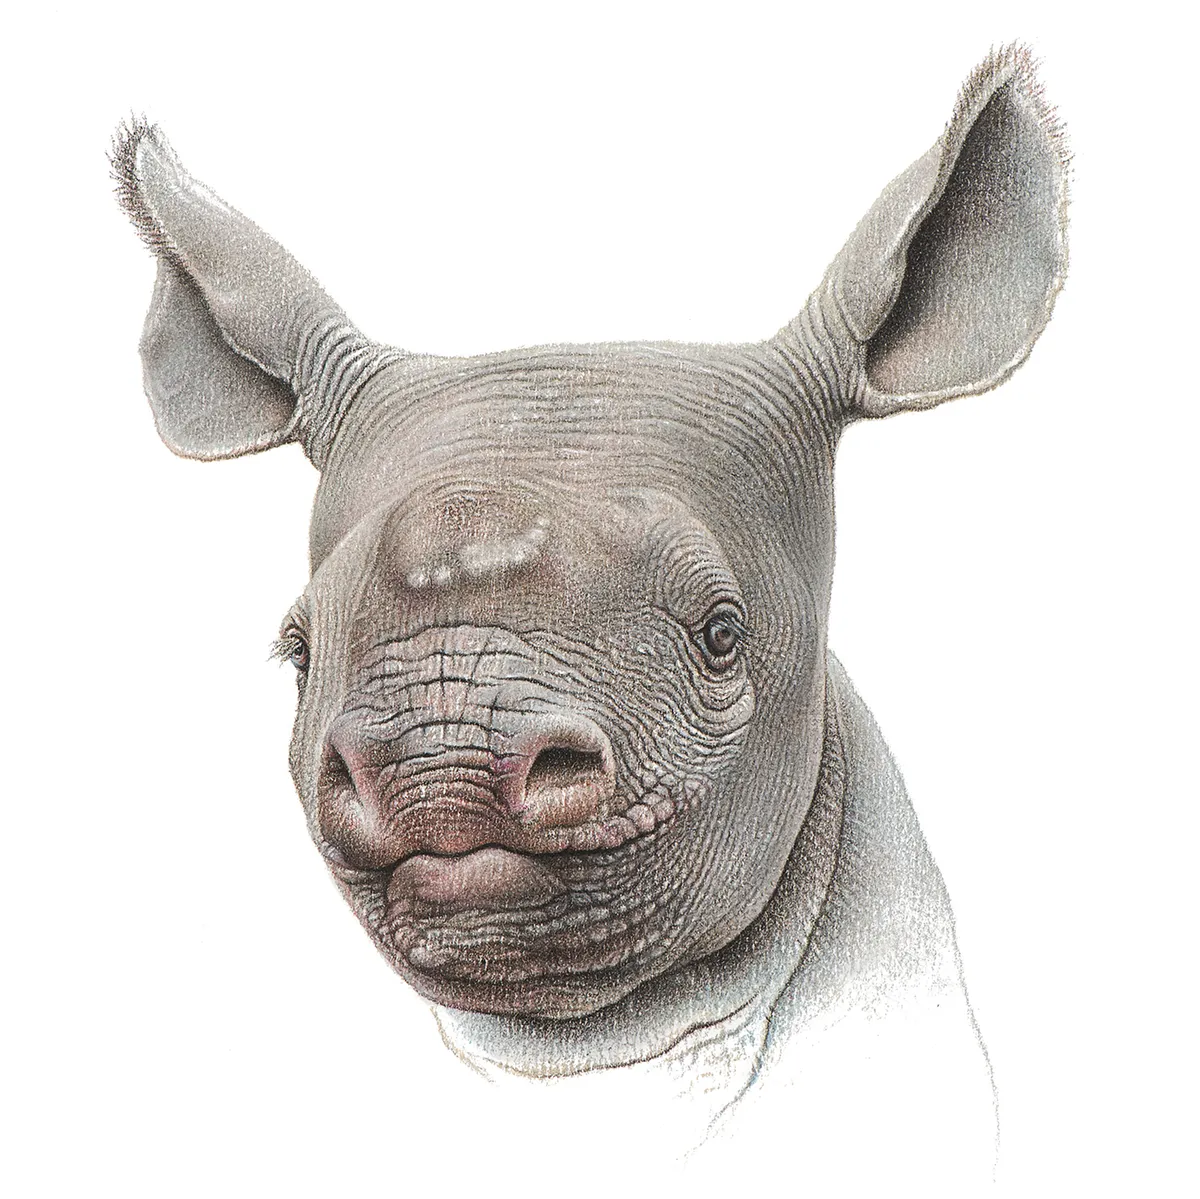 'Ingrid'. Pastel pencil drawing of a rhino calf. © mART